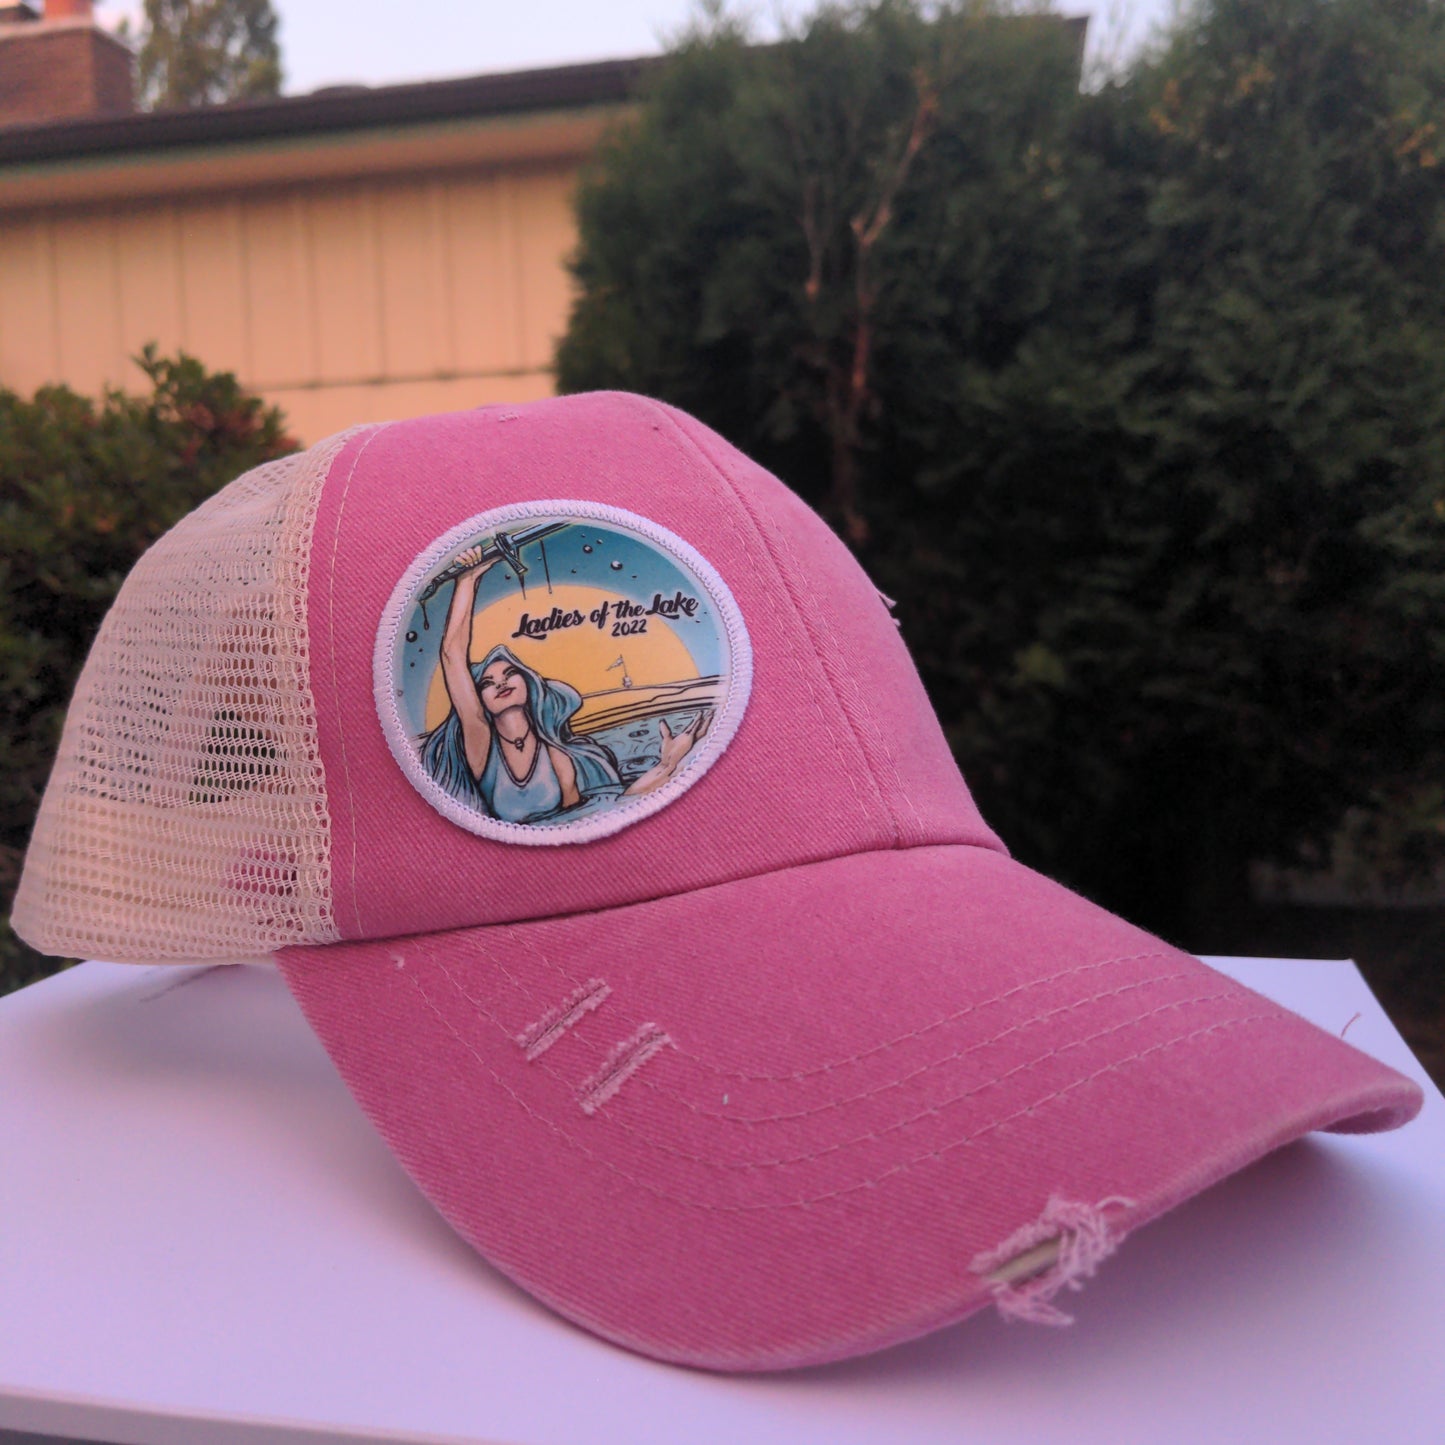 Ladies of the Lake Cross-back Ponytail Hat